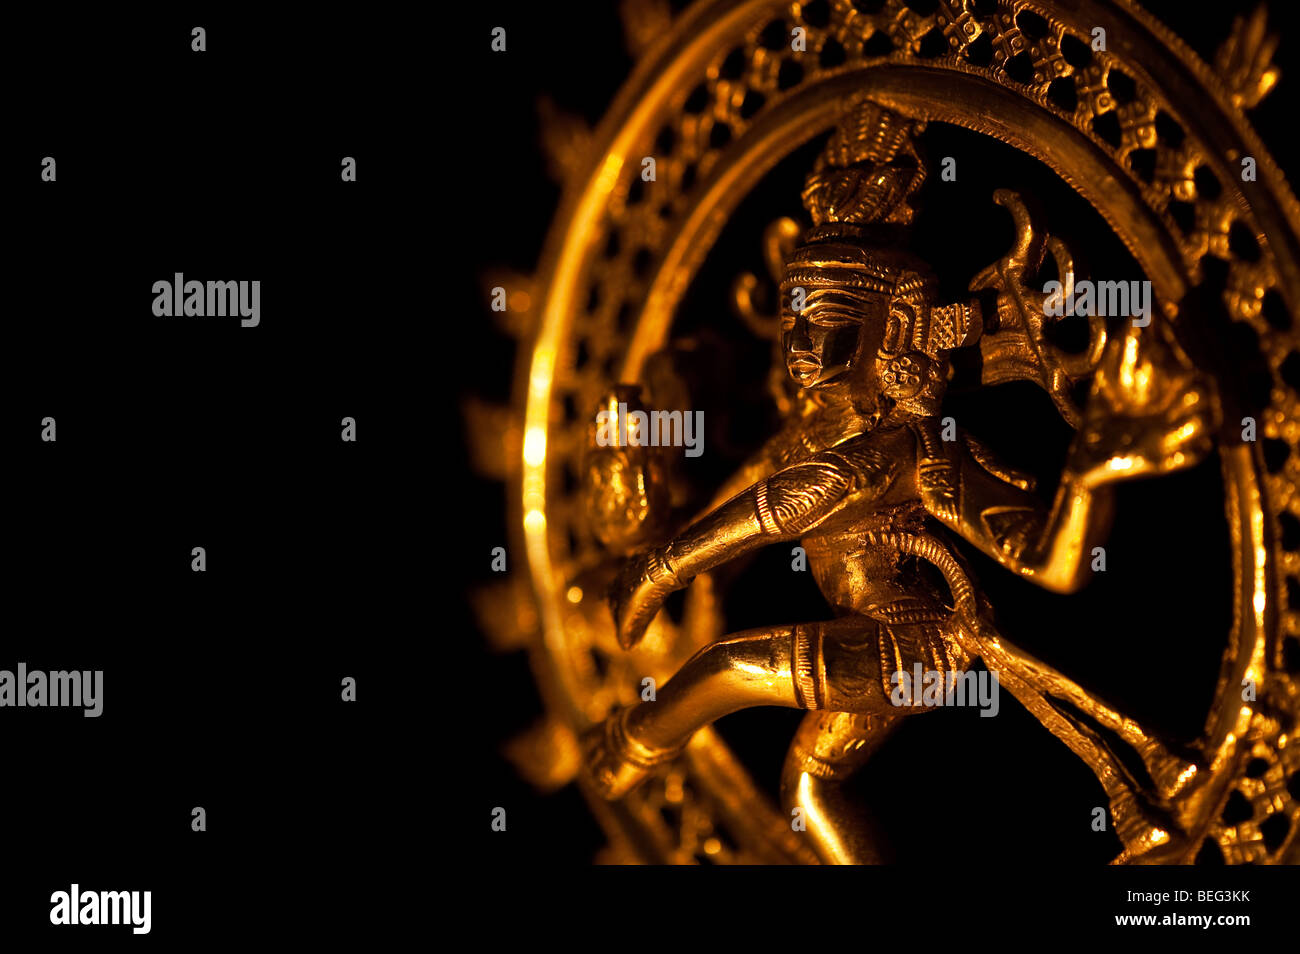 Dancing lord Shiva statue, Nataraja against black background Stock Photo